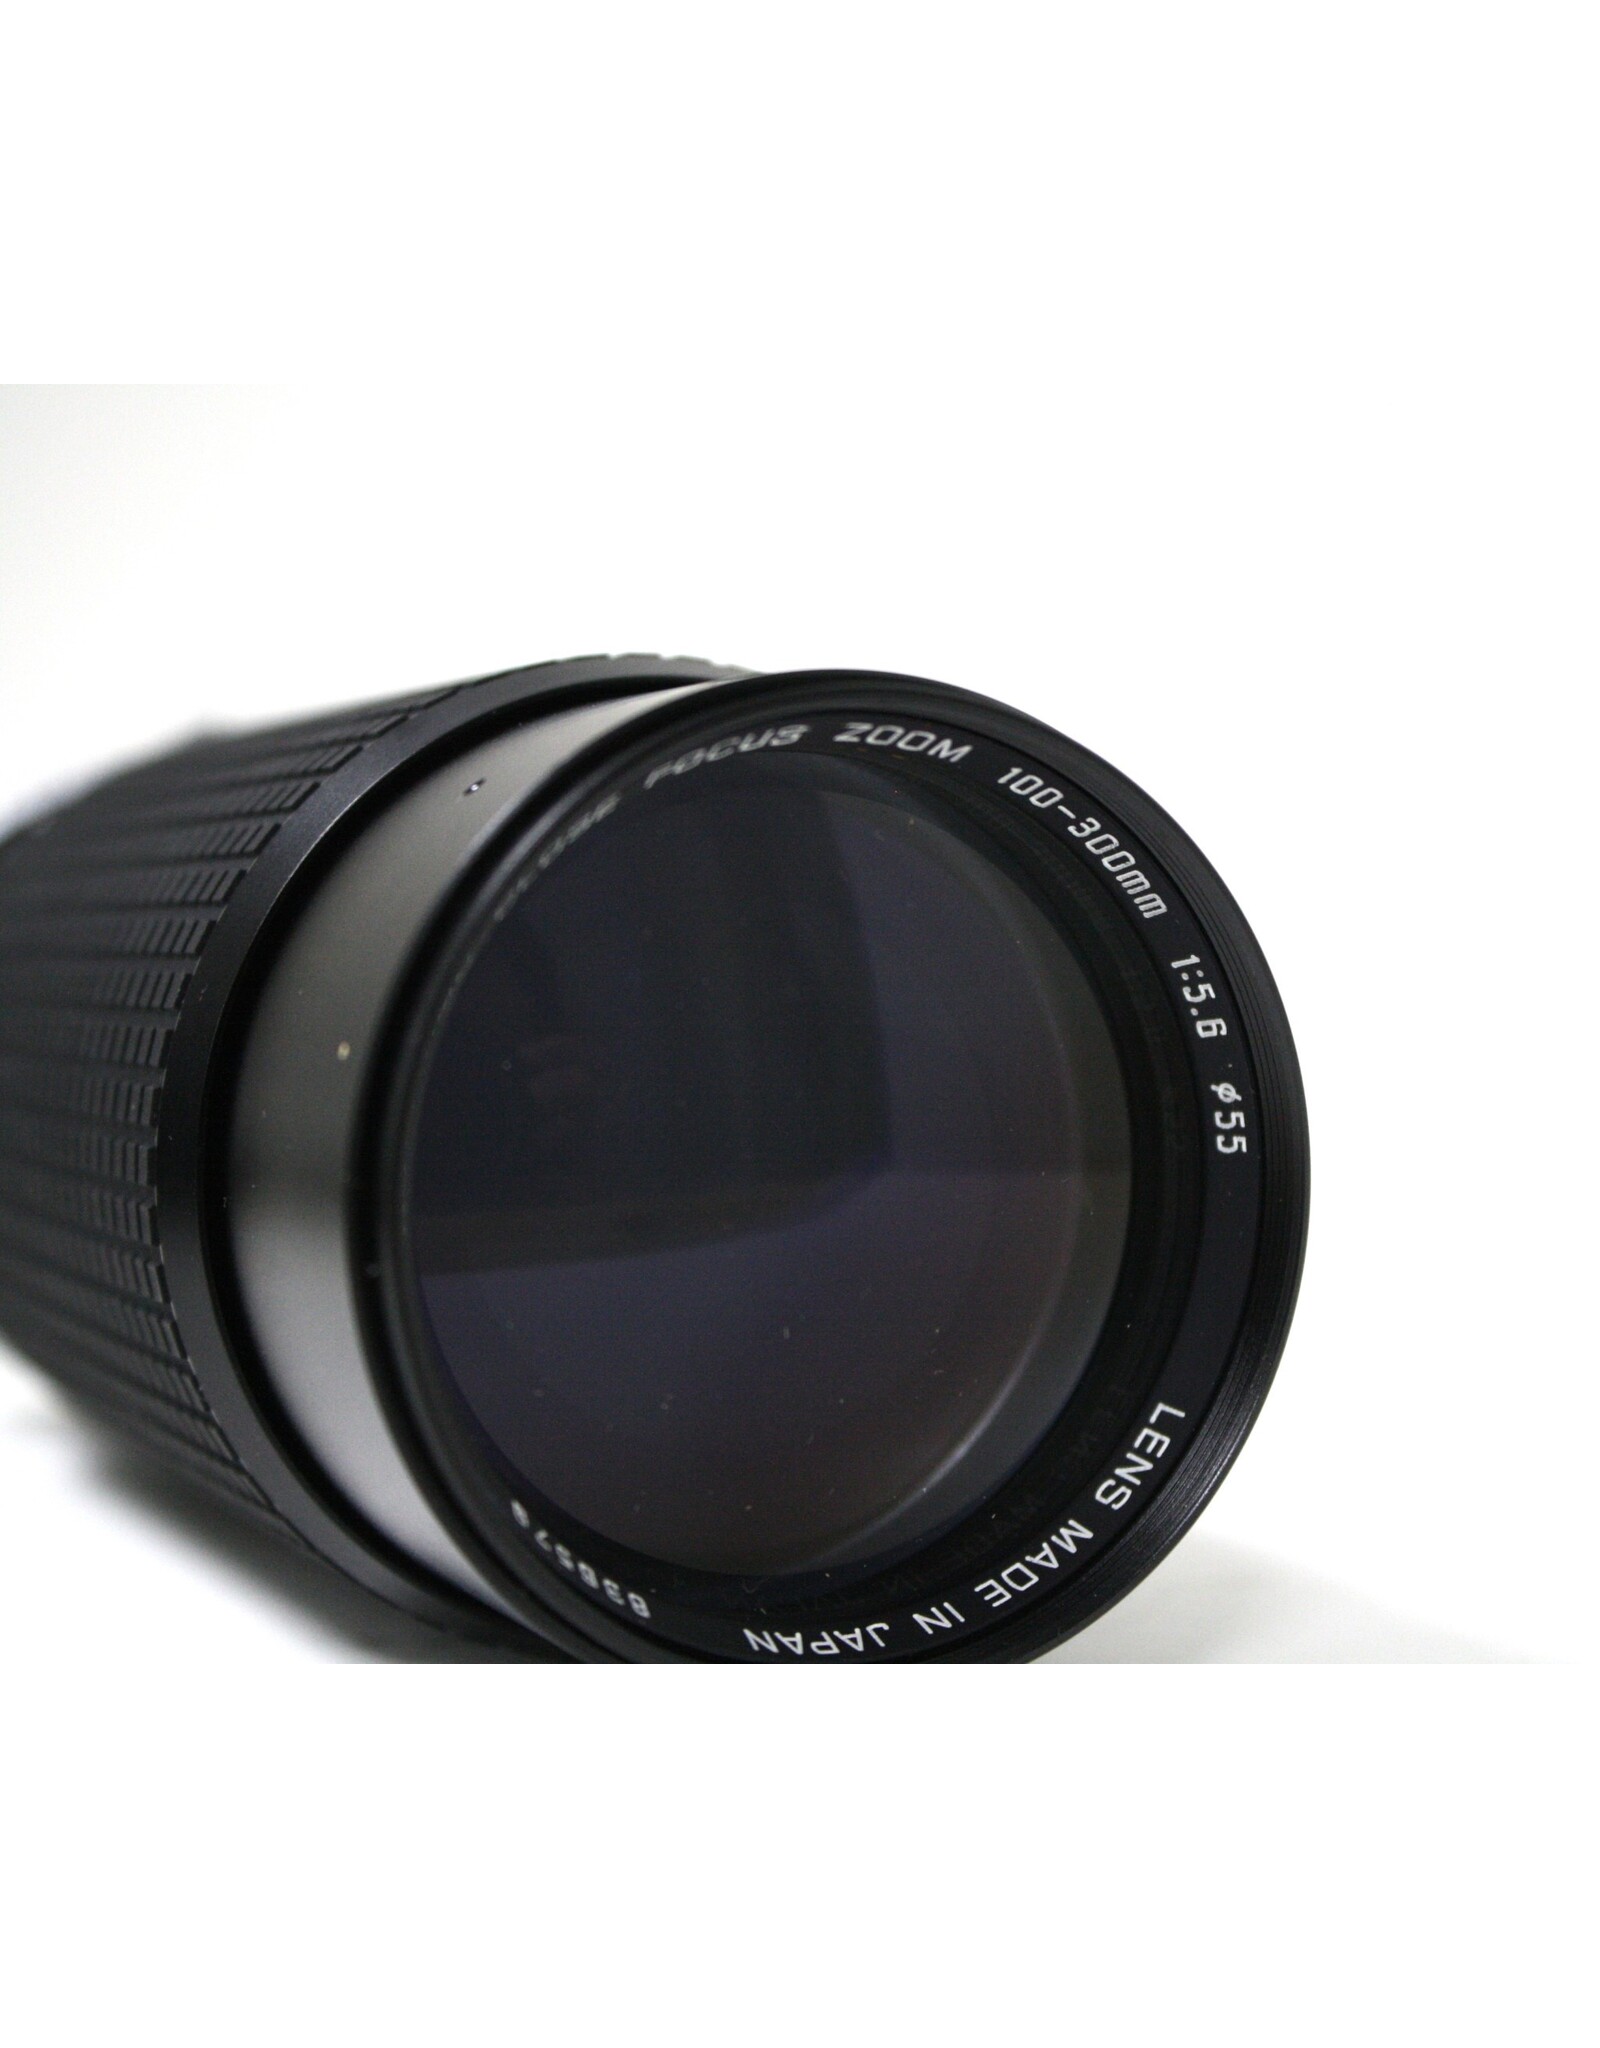 Hoya HMC Close Focus Zoom 100-300mm 1:5.6 (Nikon)